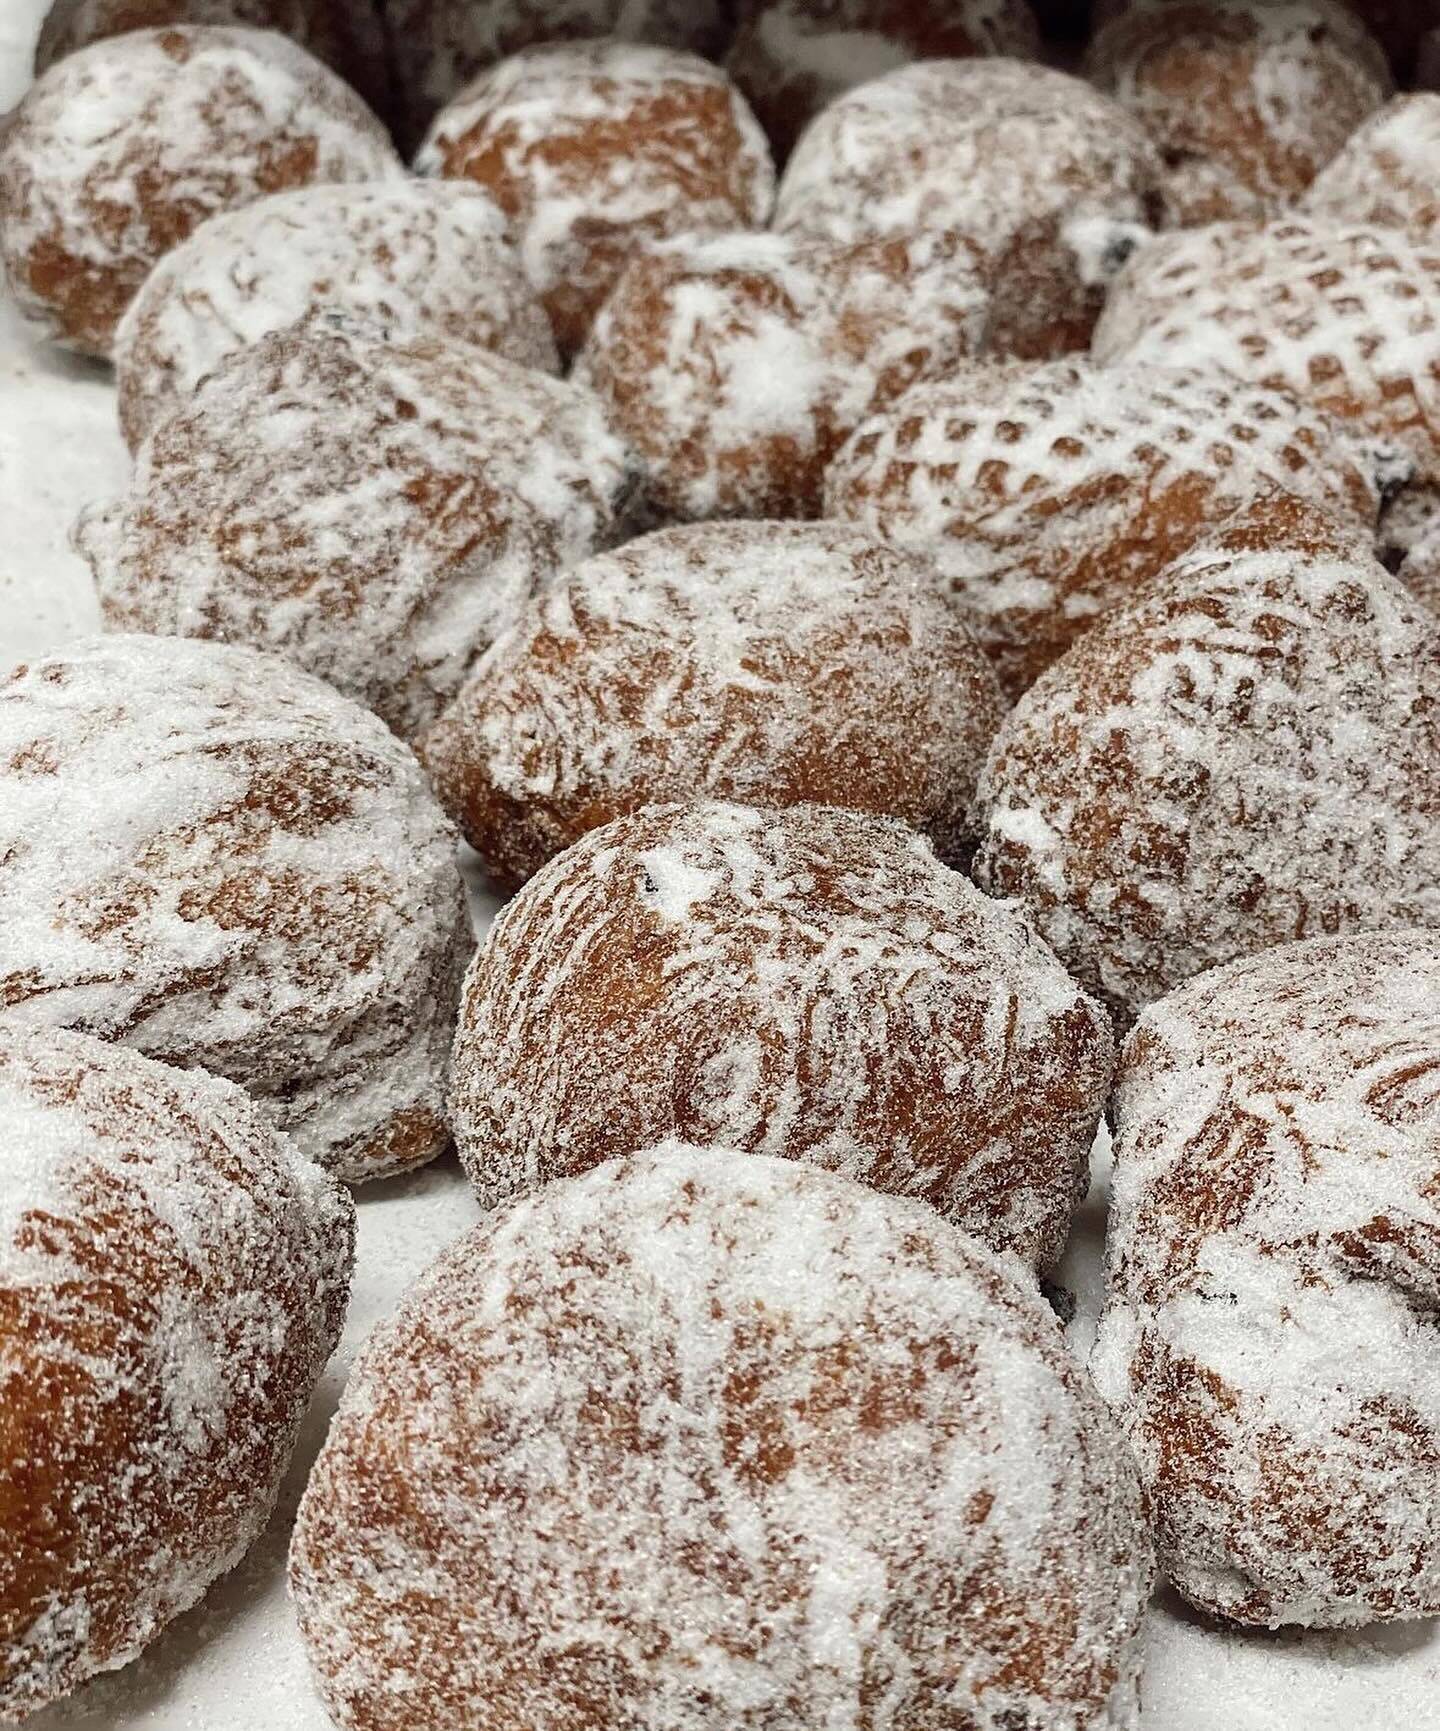 Photo by Meg Deater
Chris’ Bakery will serve Oliebollen, a type of Dutch donut, all week.